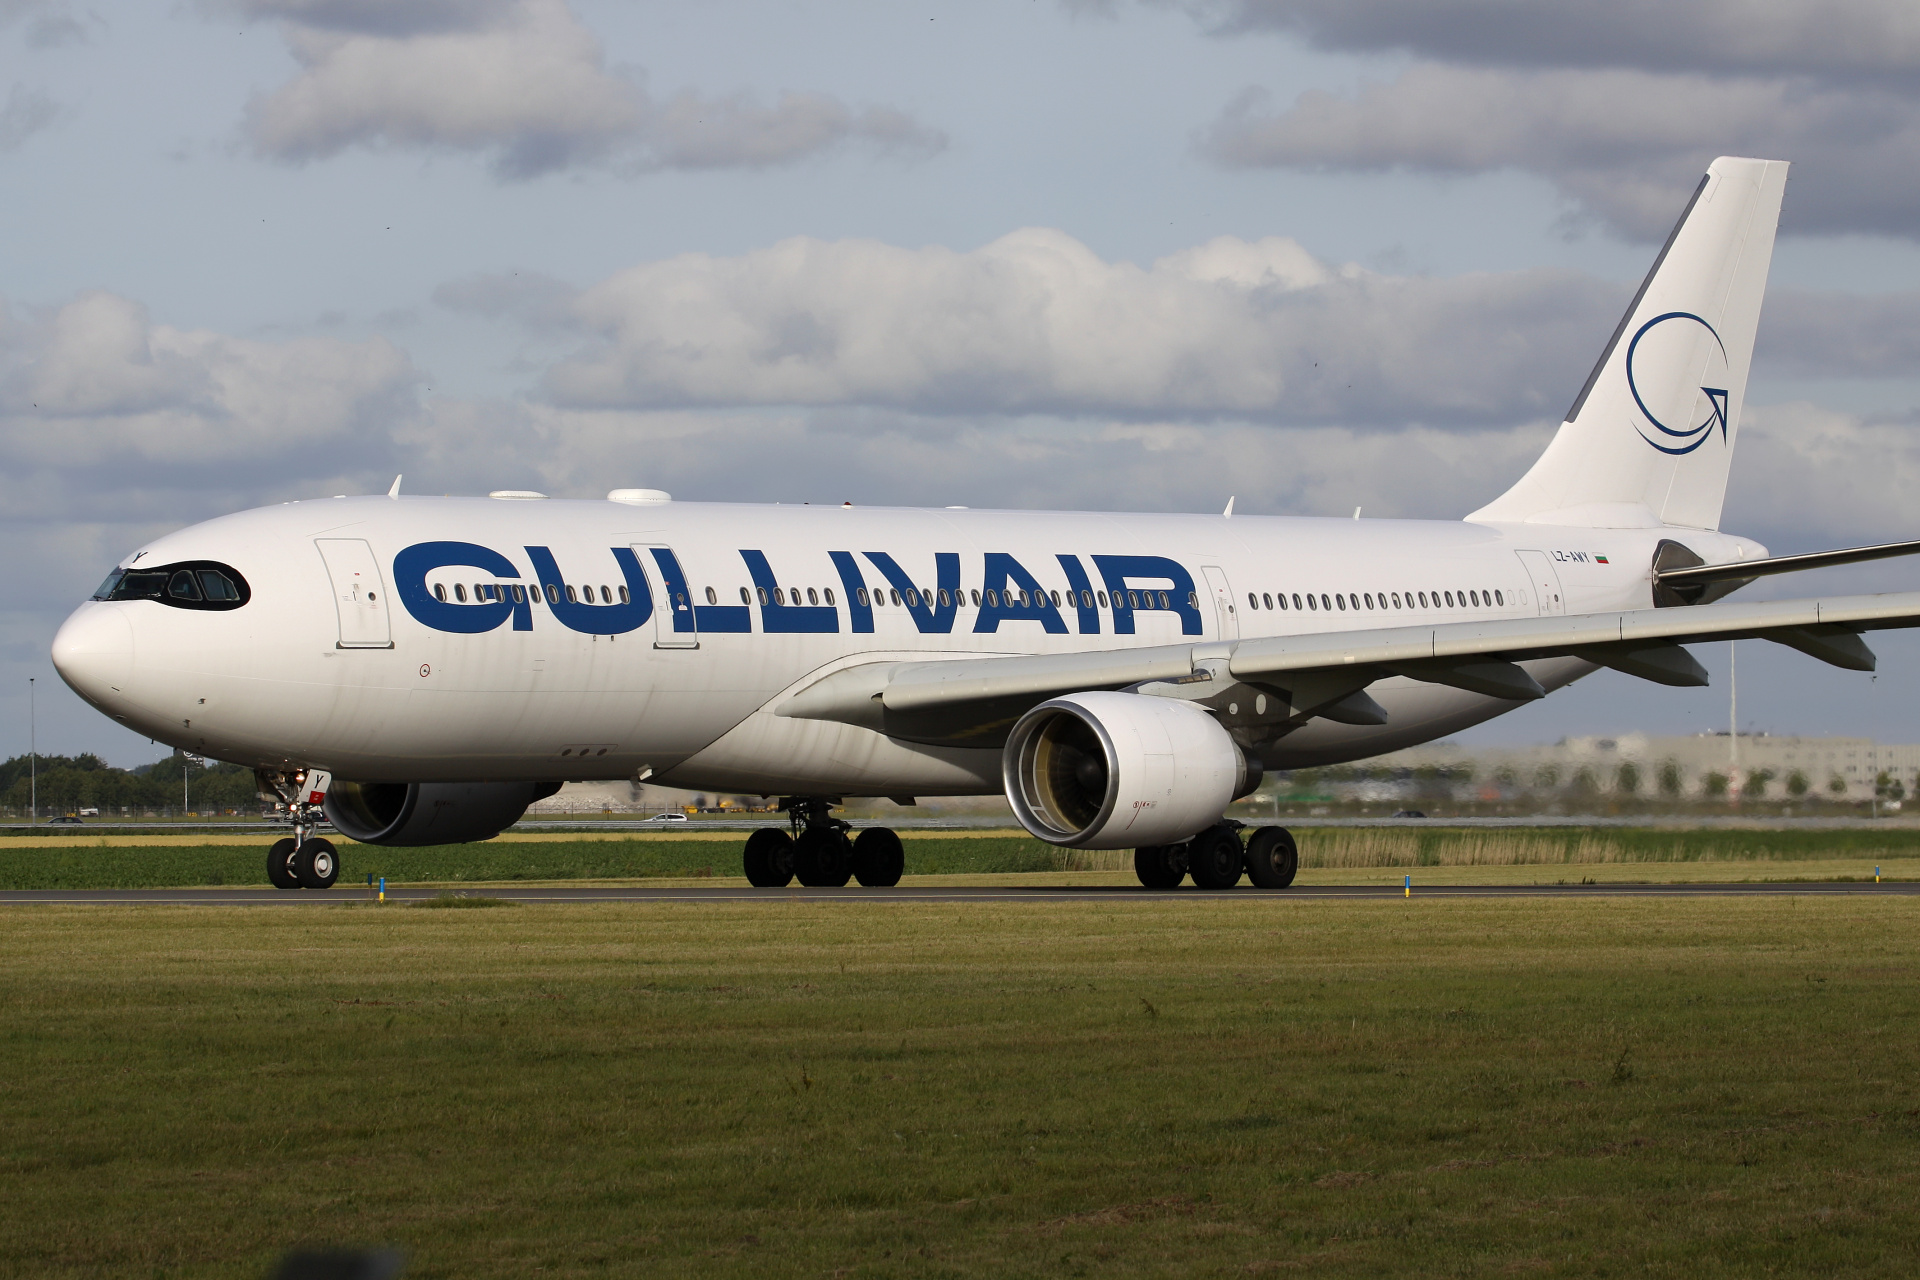 LZ-AWY, GullivAir (Aircraft » Schiphol Spotting » Airbus A330-200)